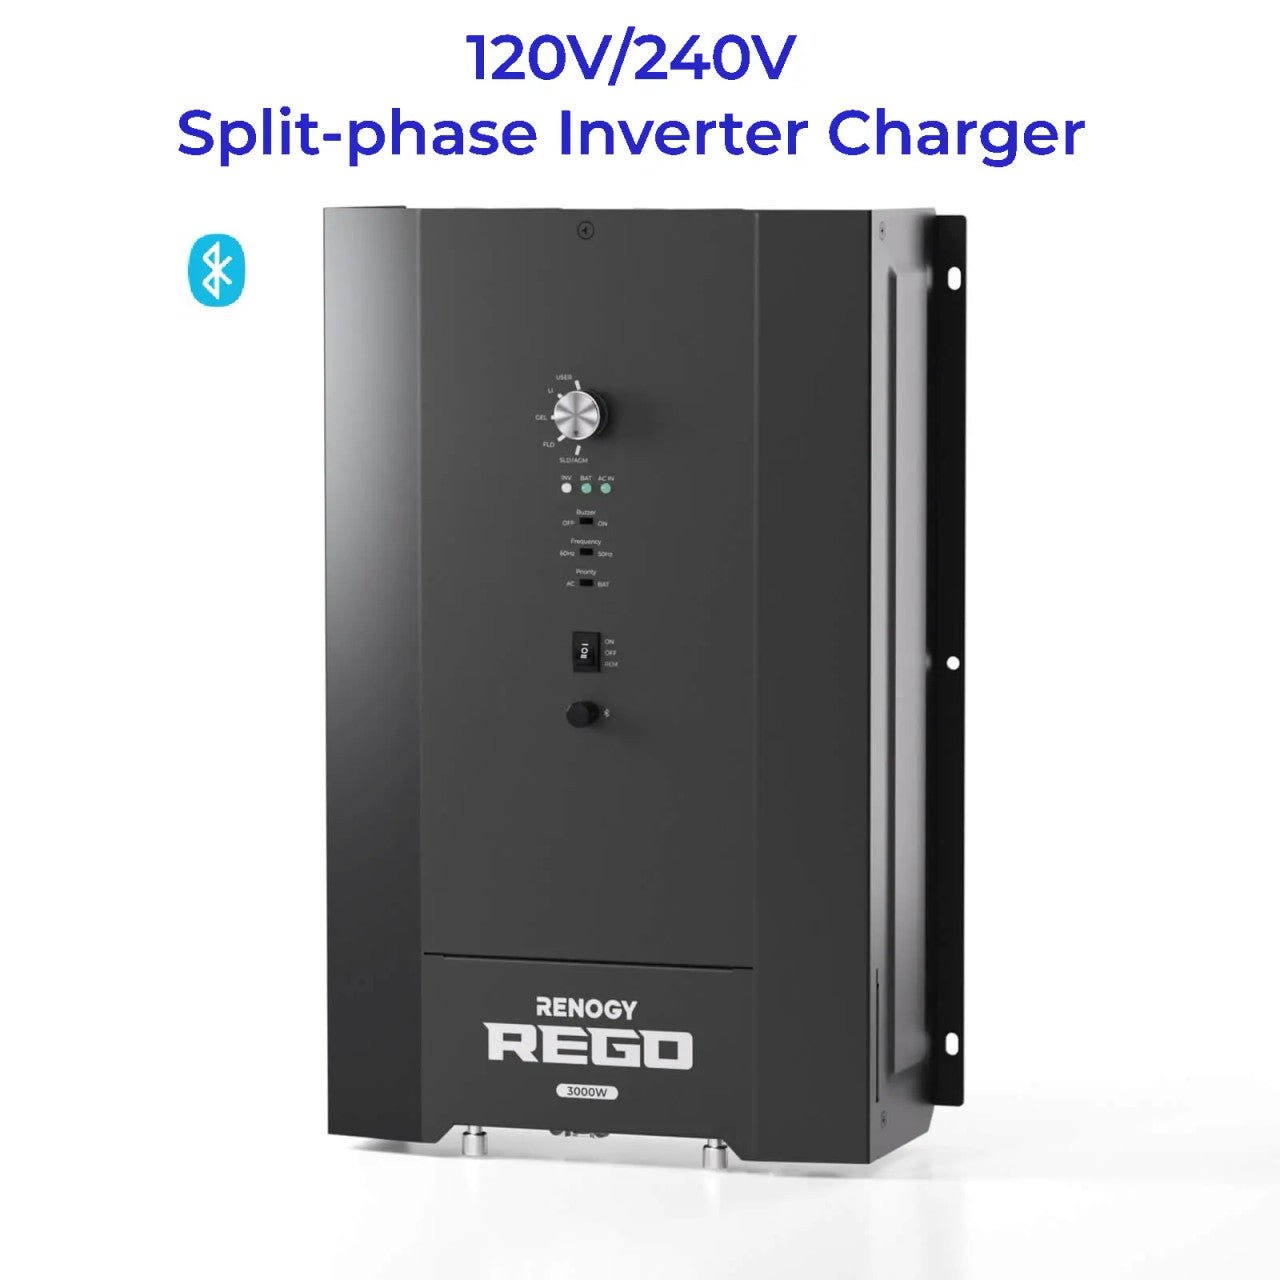 Renogy REGO 3000W 12V Pure Sine Wave HF Inverter Charger Split-phase Design - Solar Generators and Power Stations Plus